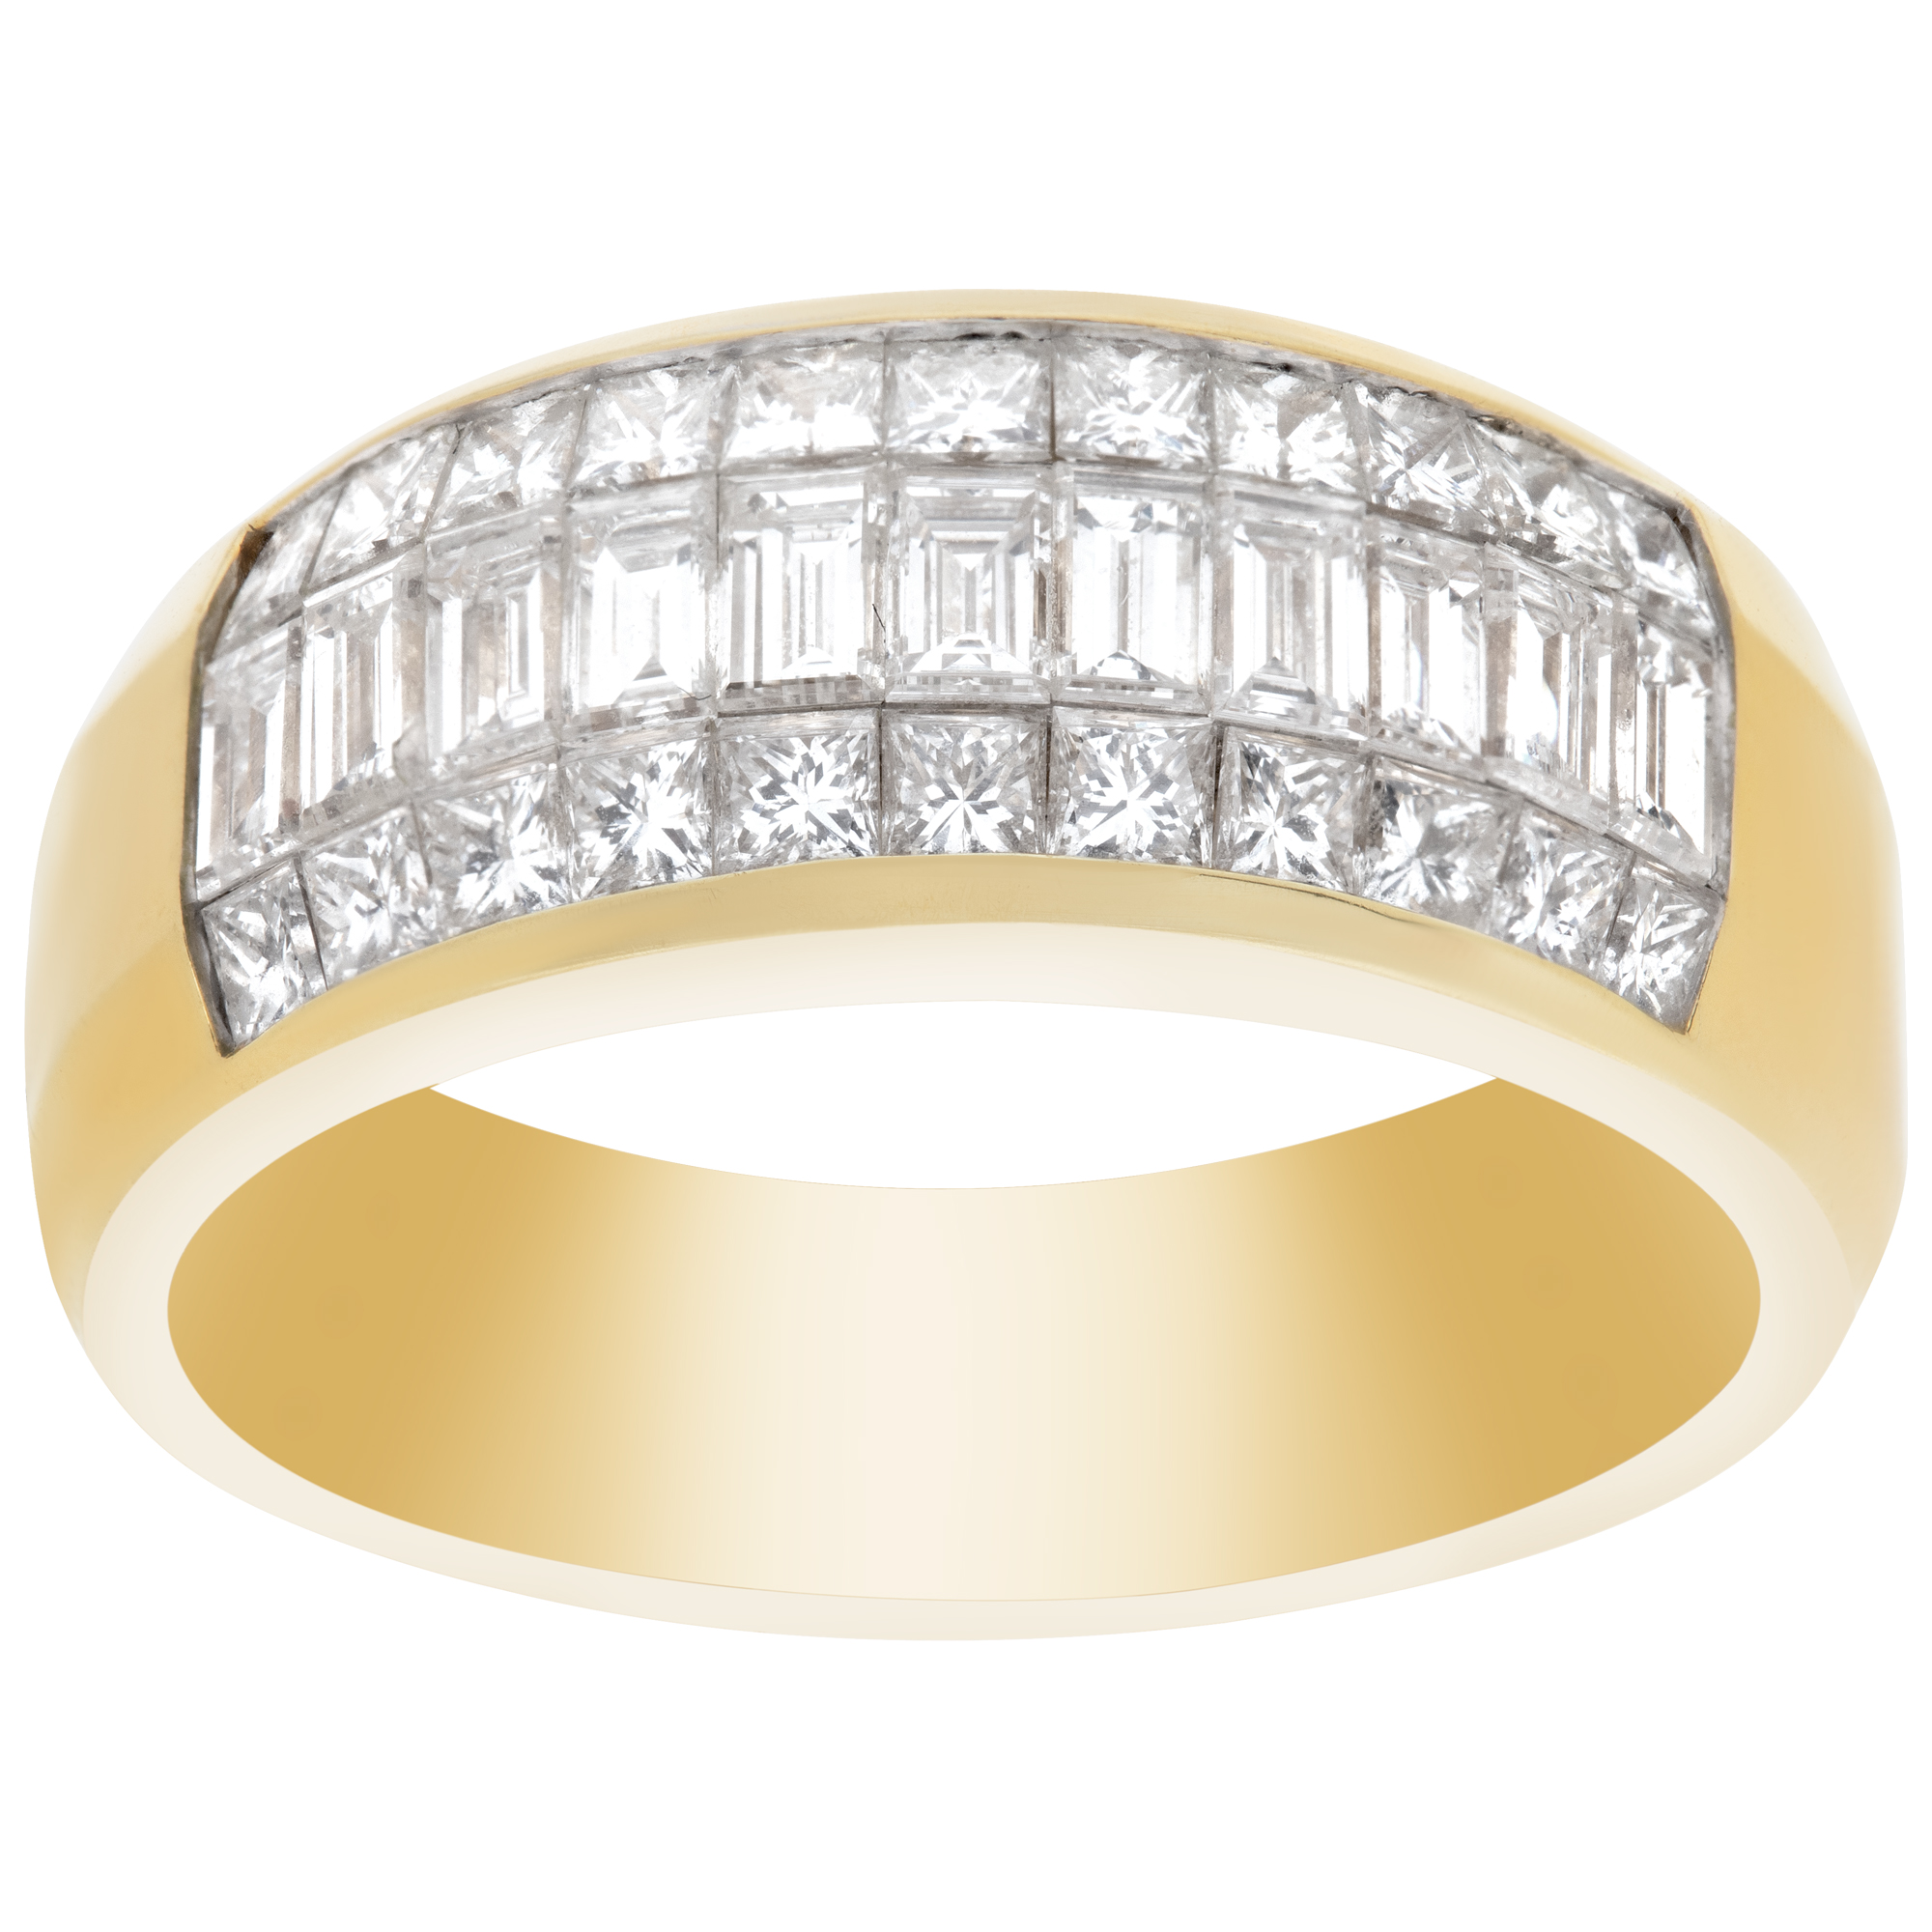 Beautiful princess and emerald cut diamond ring in 18k